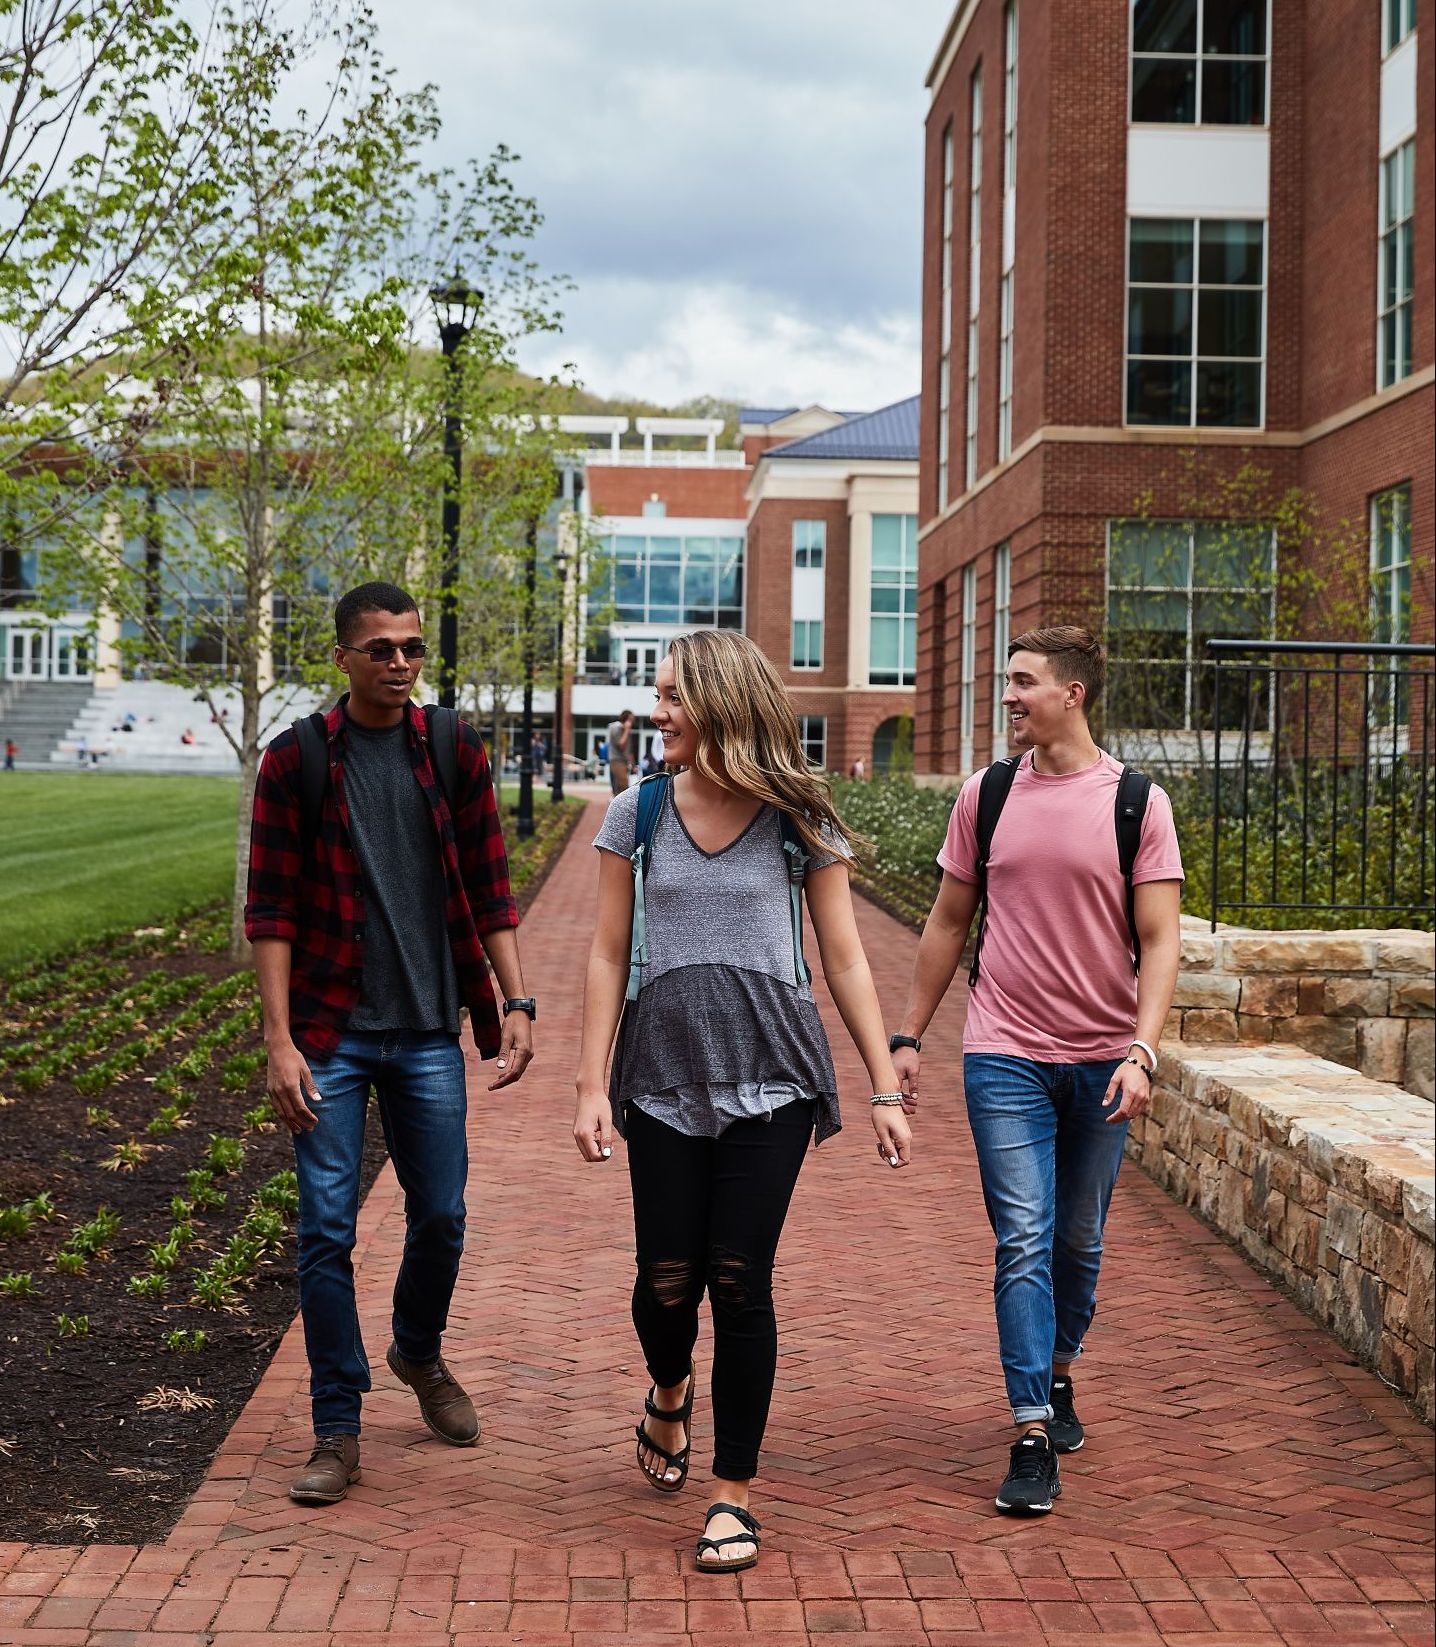 Liberty university admissions essay help